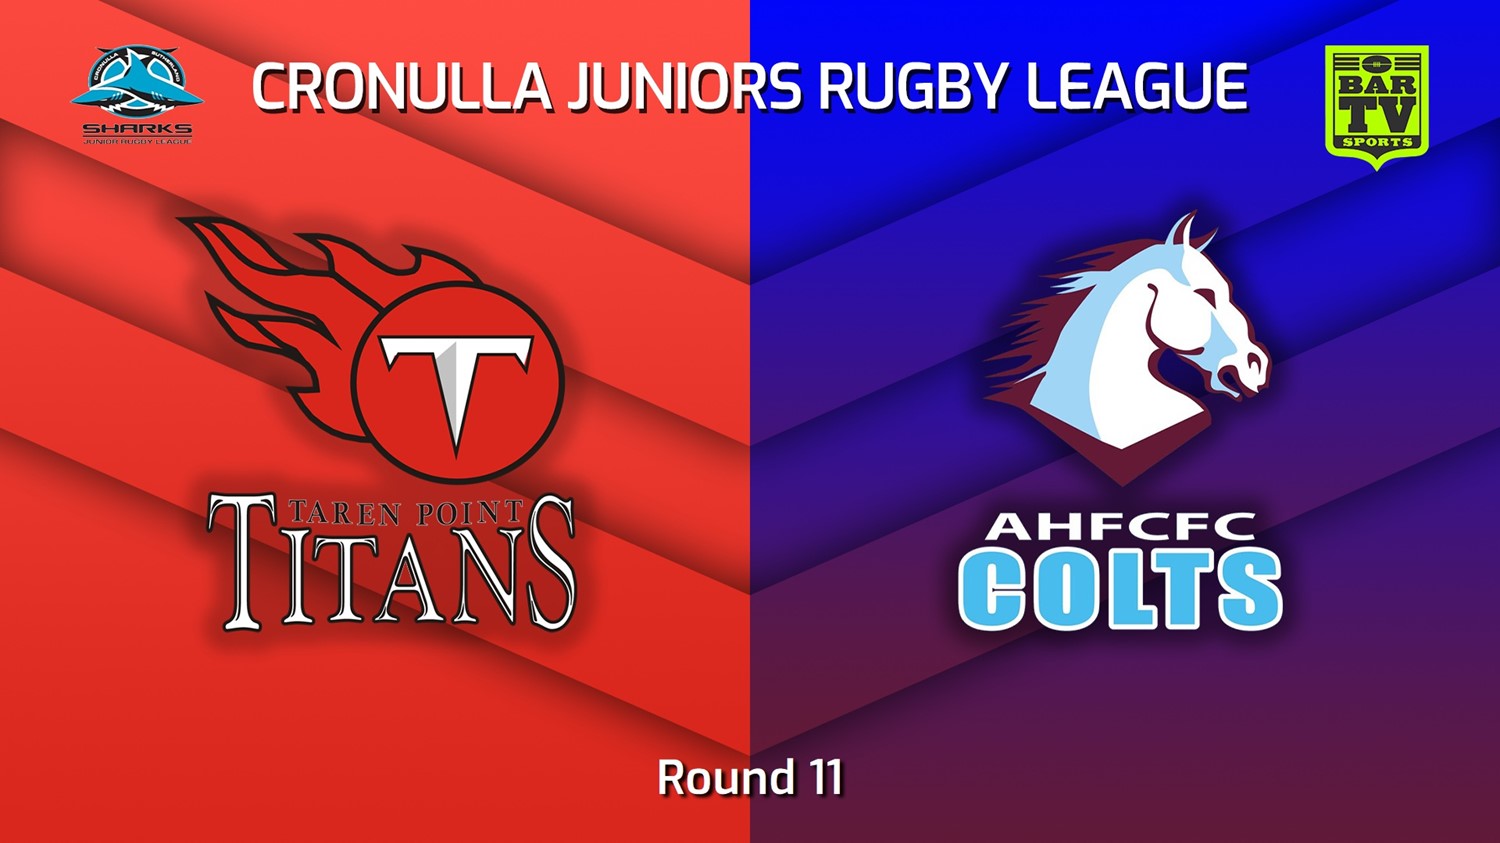 220717-Cronulla Juniors - U15 Gold Round 11 - Taren Point Titans v Aquinas Colts Slate Image